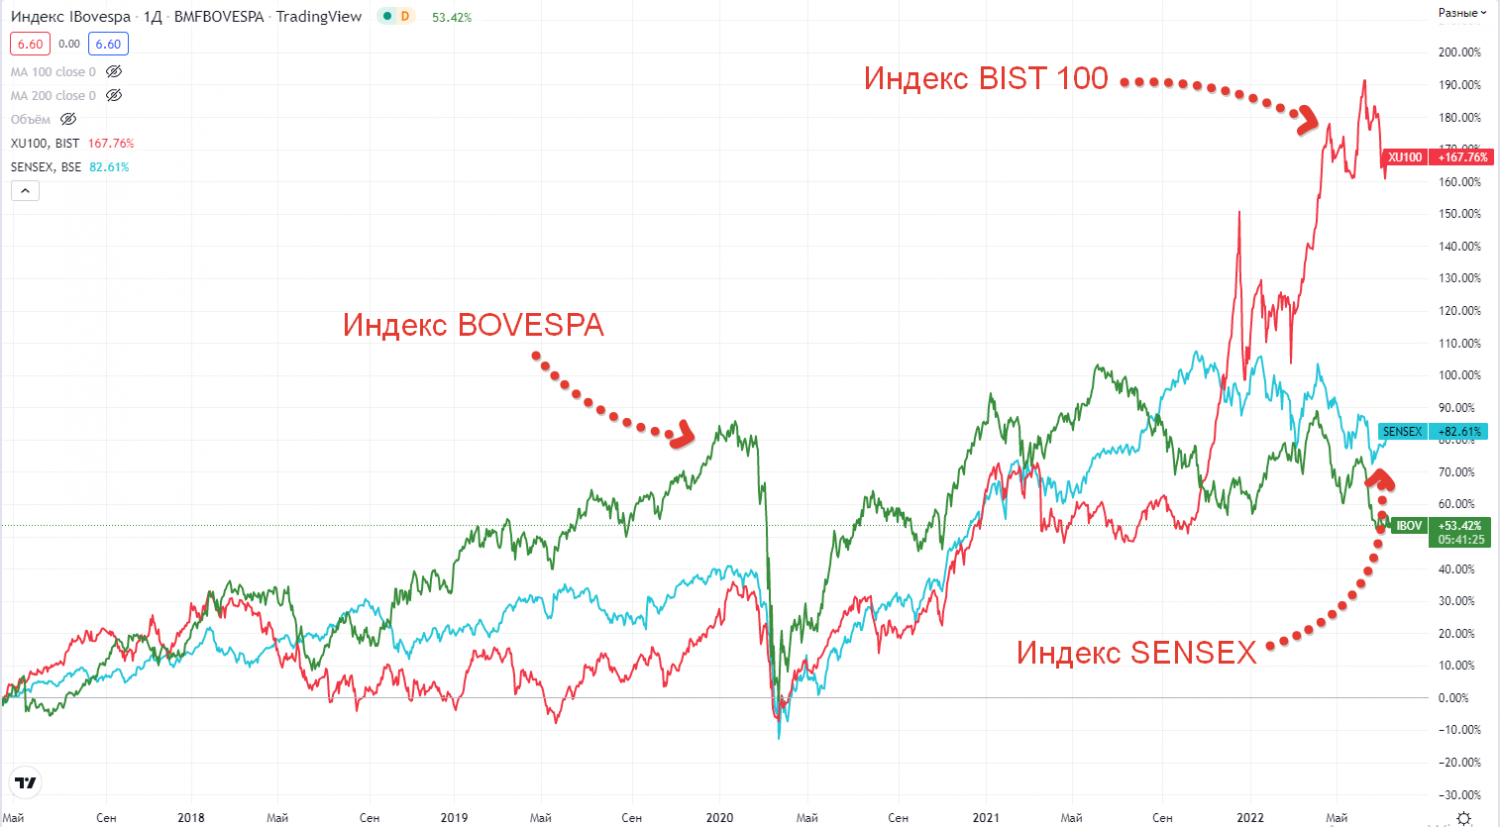 динамика Индекса BIST 100 против индексов Sensex и Bovespa